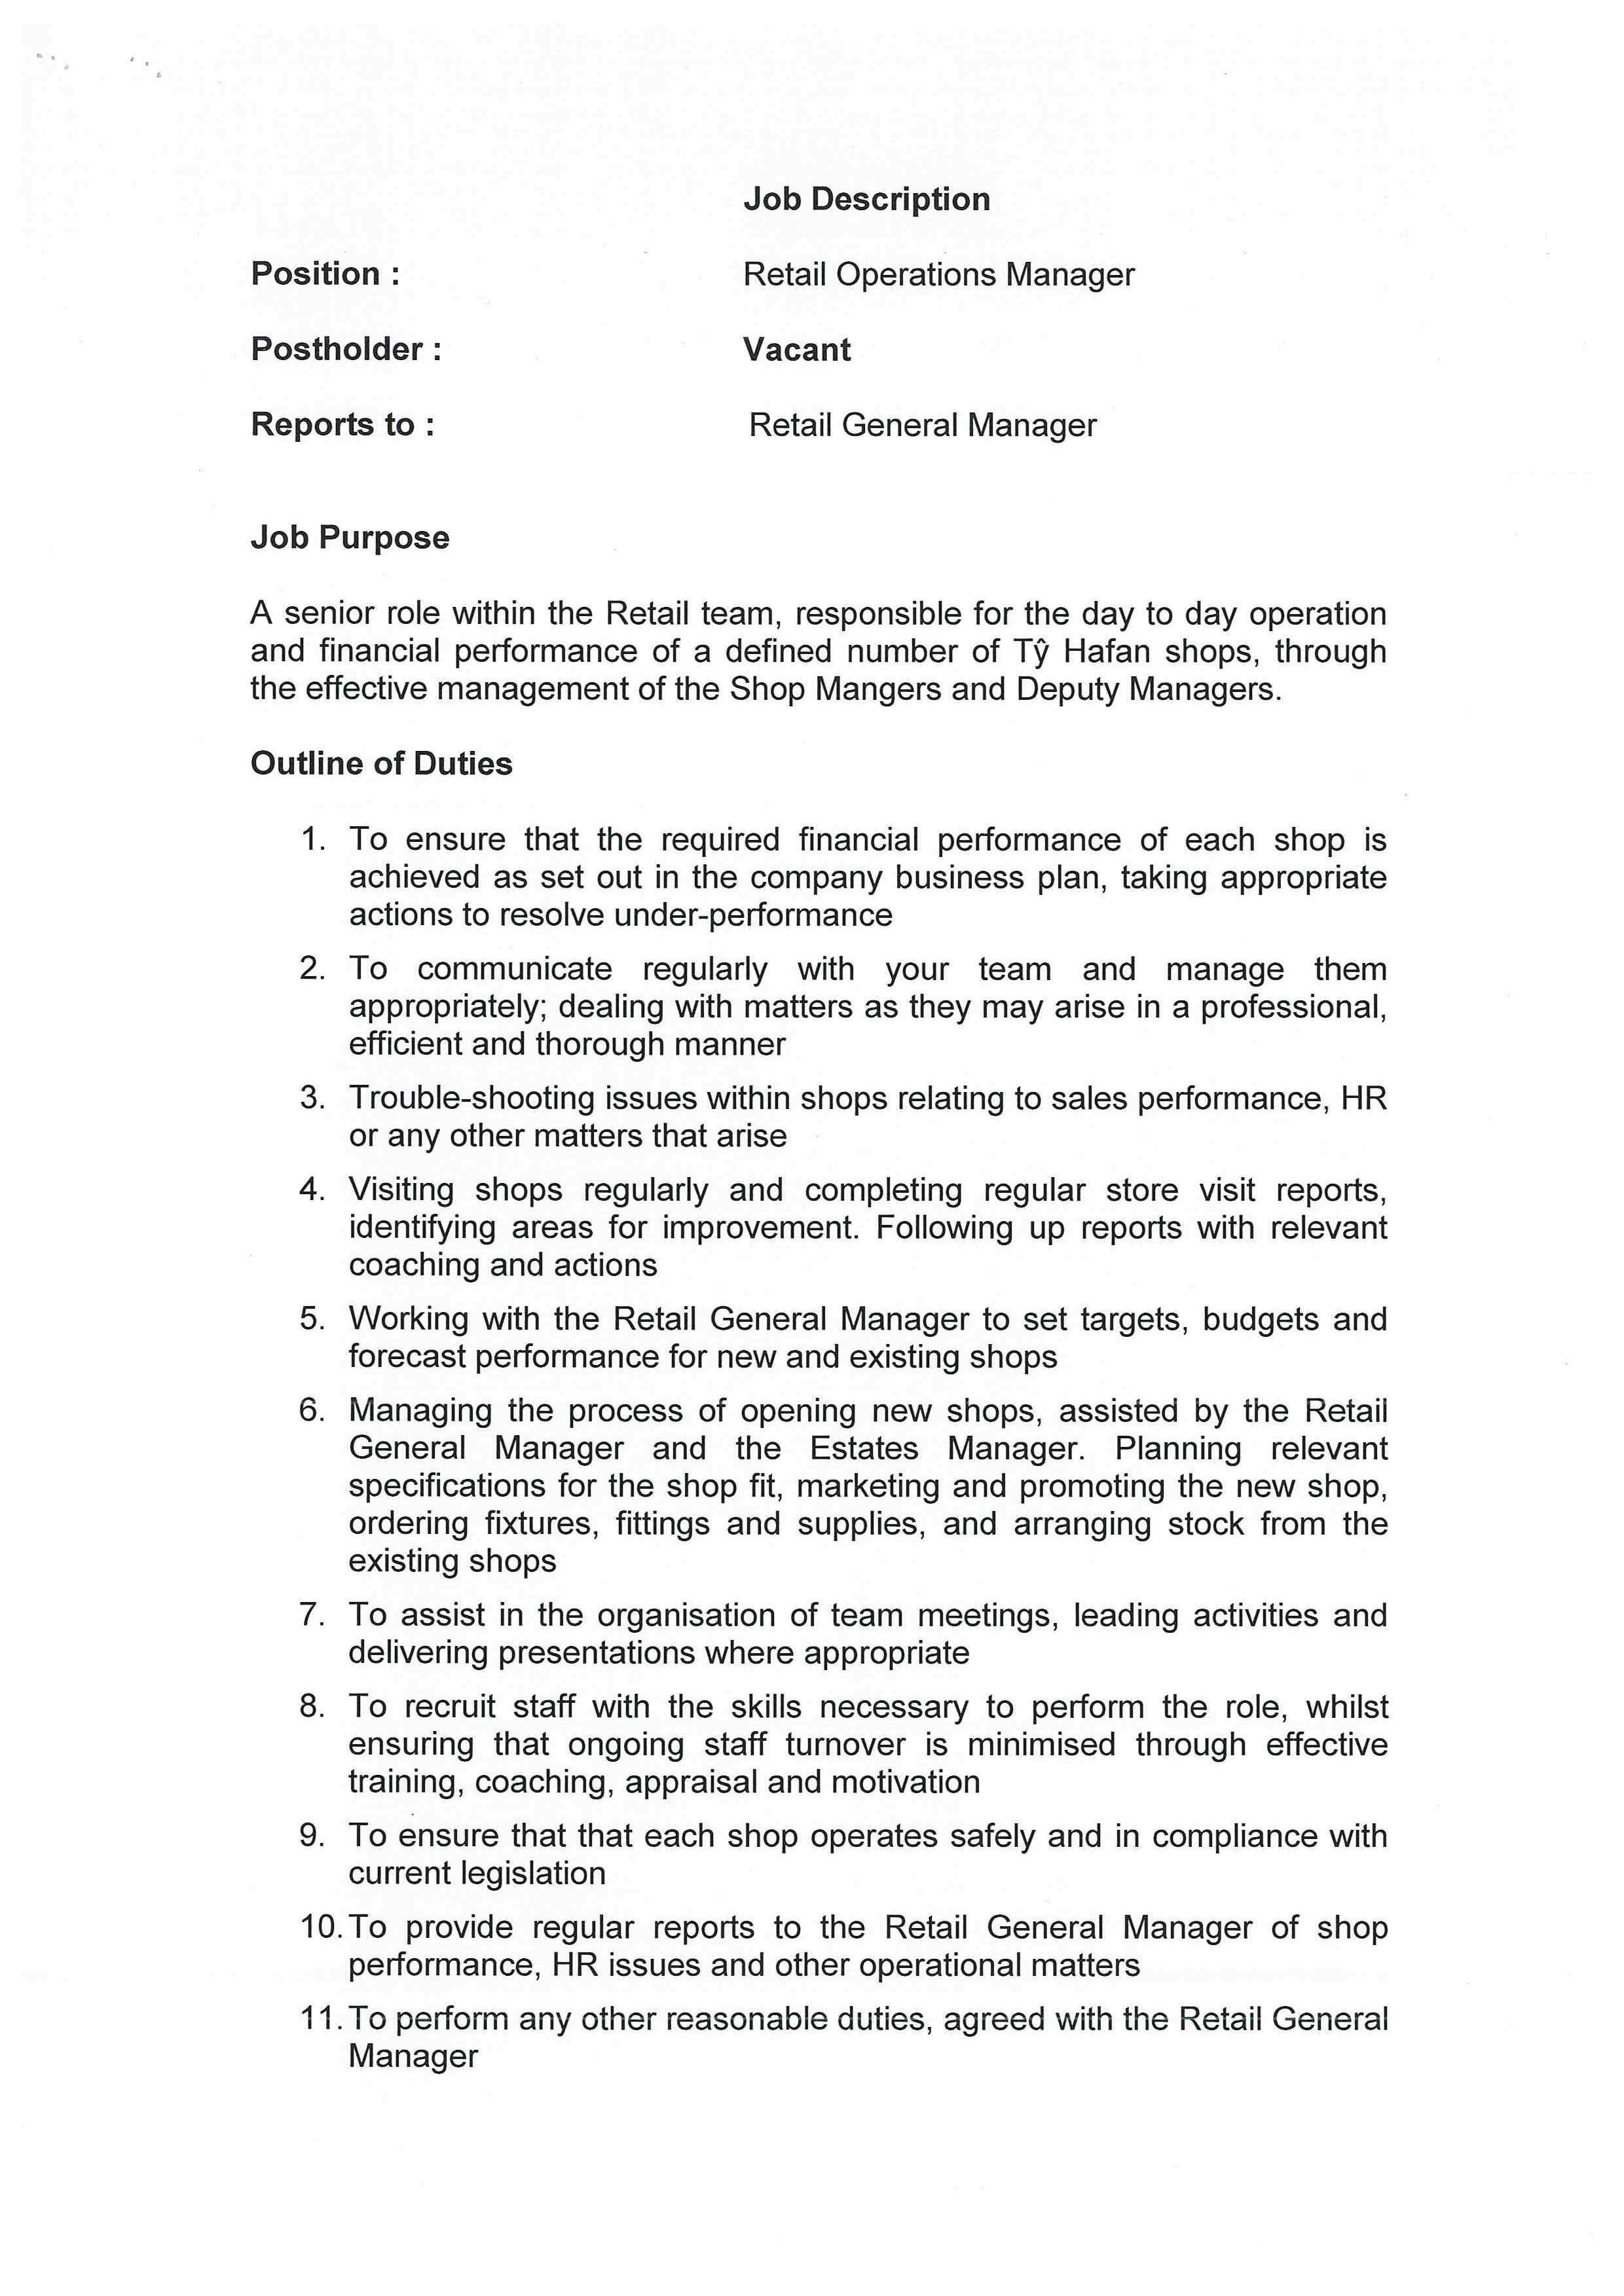 Retail General Manager Job Vacancy Description template 模板